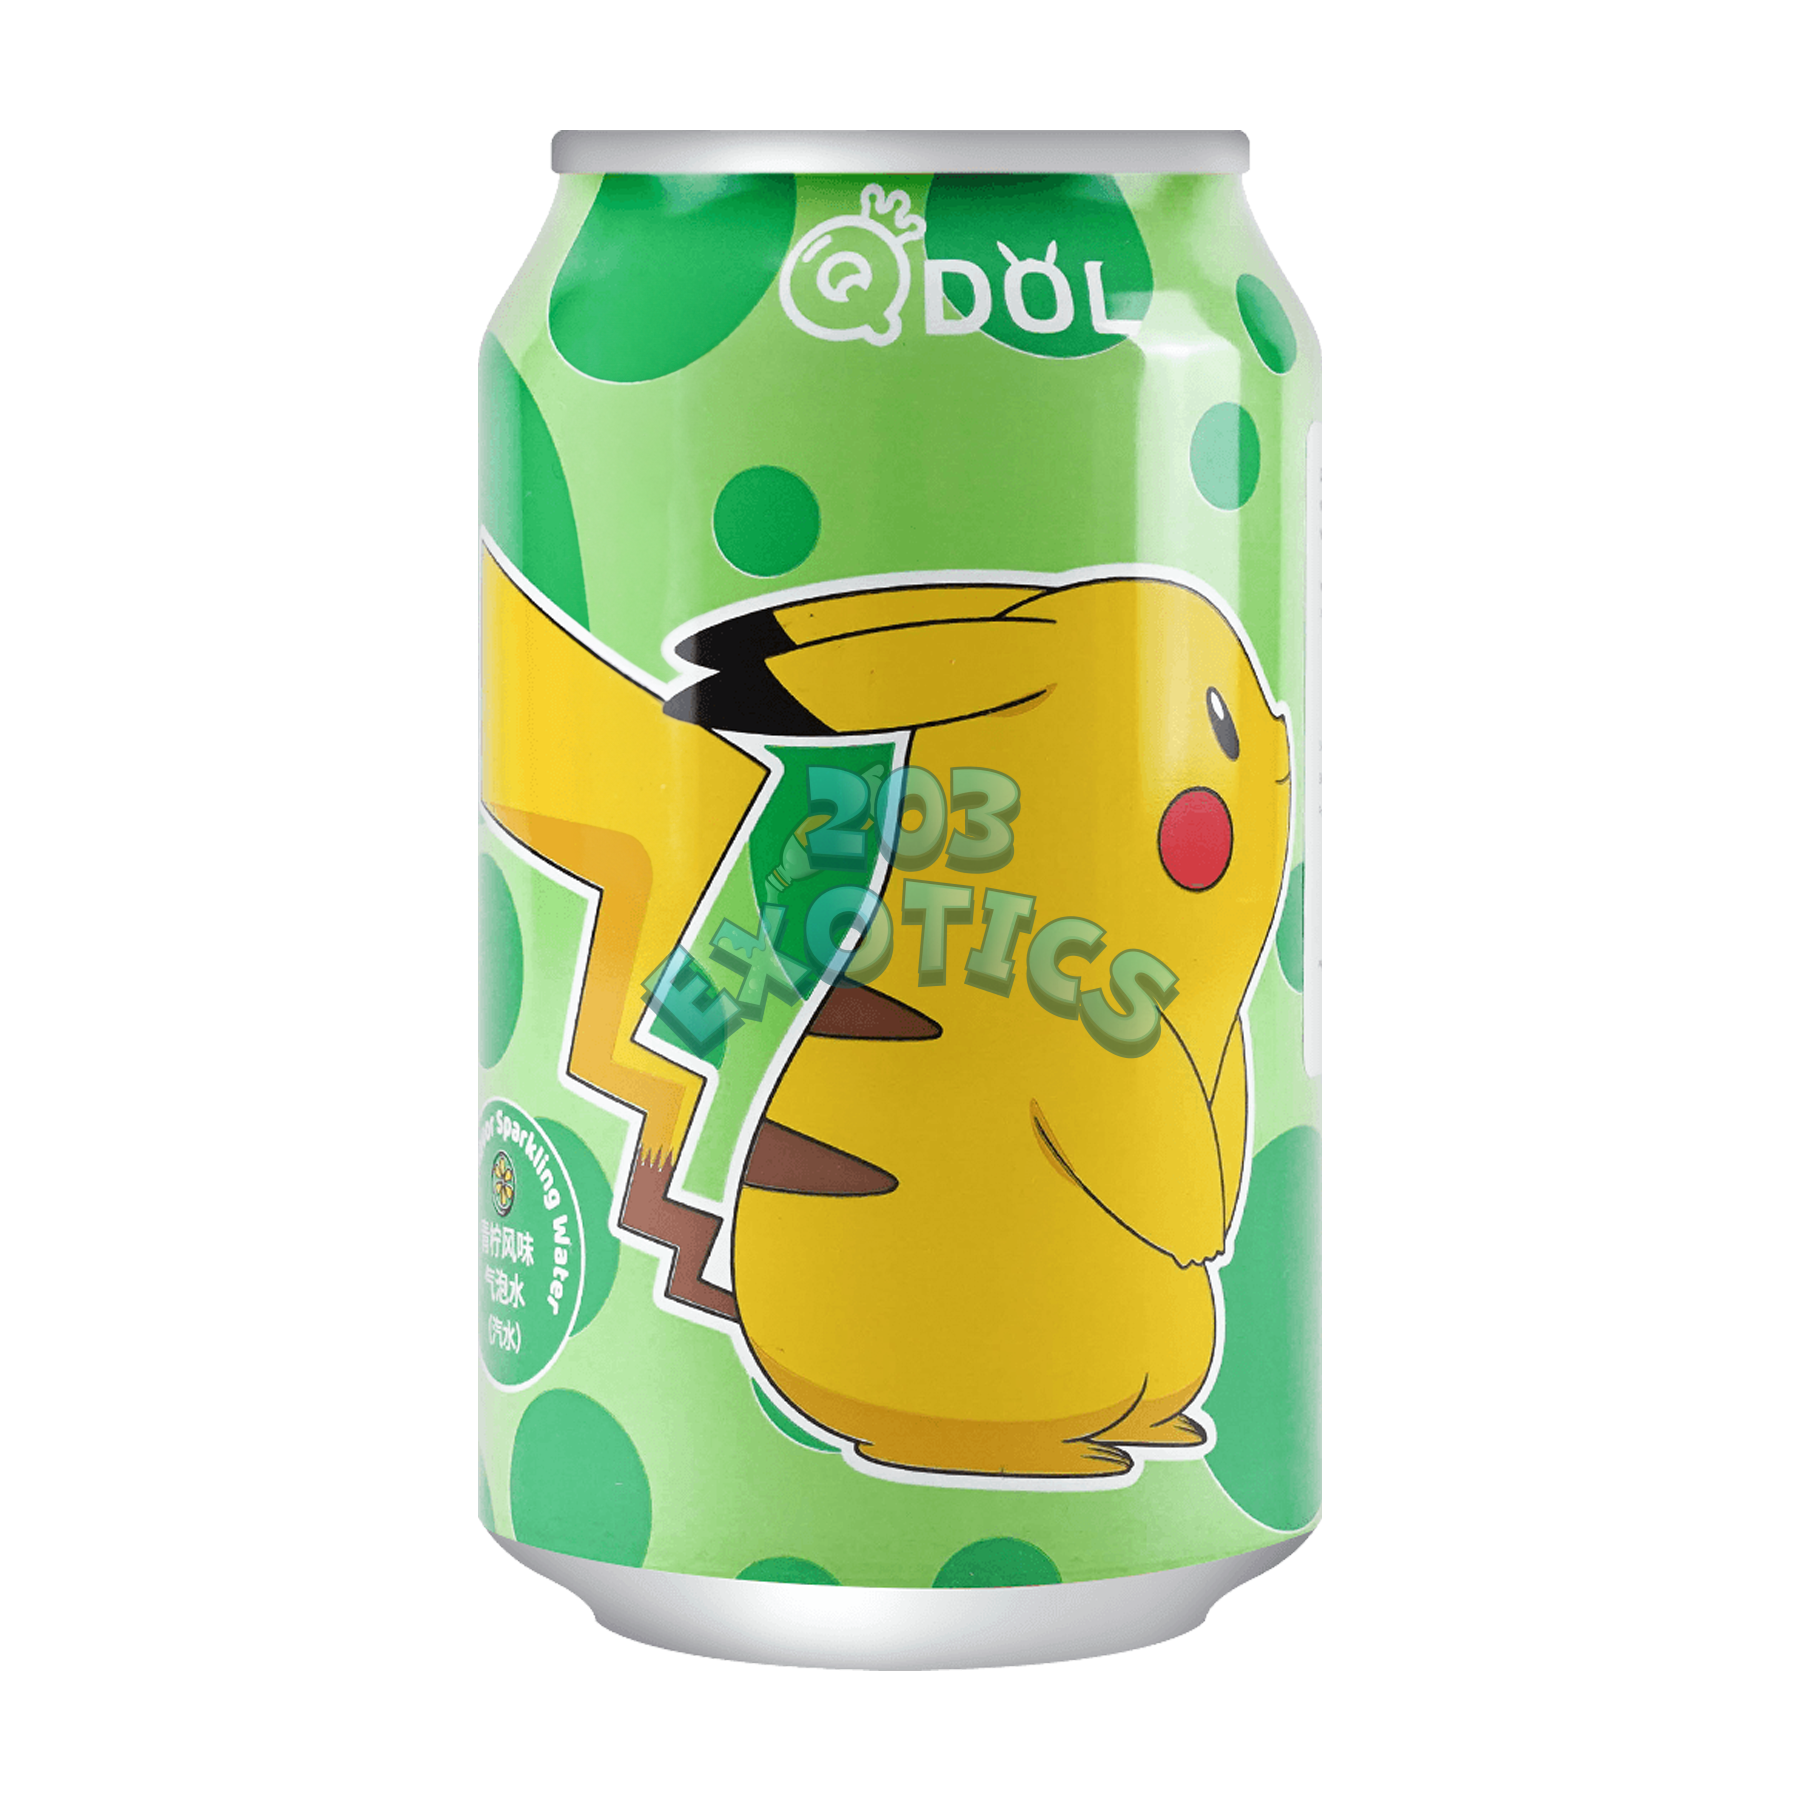 Qdol Pokemon Sparkling Water Pikachu Lime Flavored (11.16 Fl Oz)